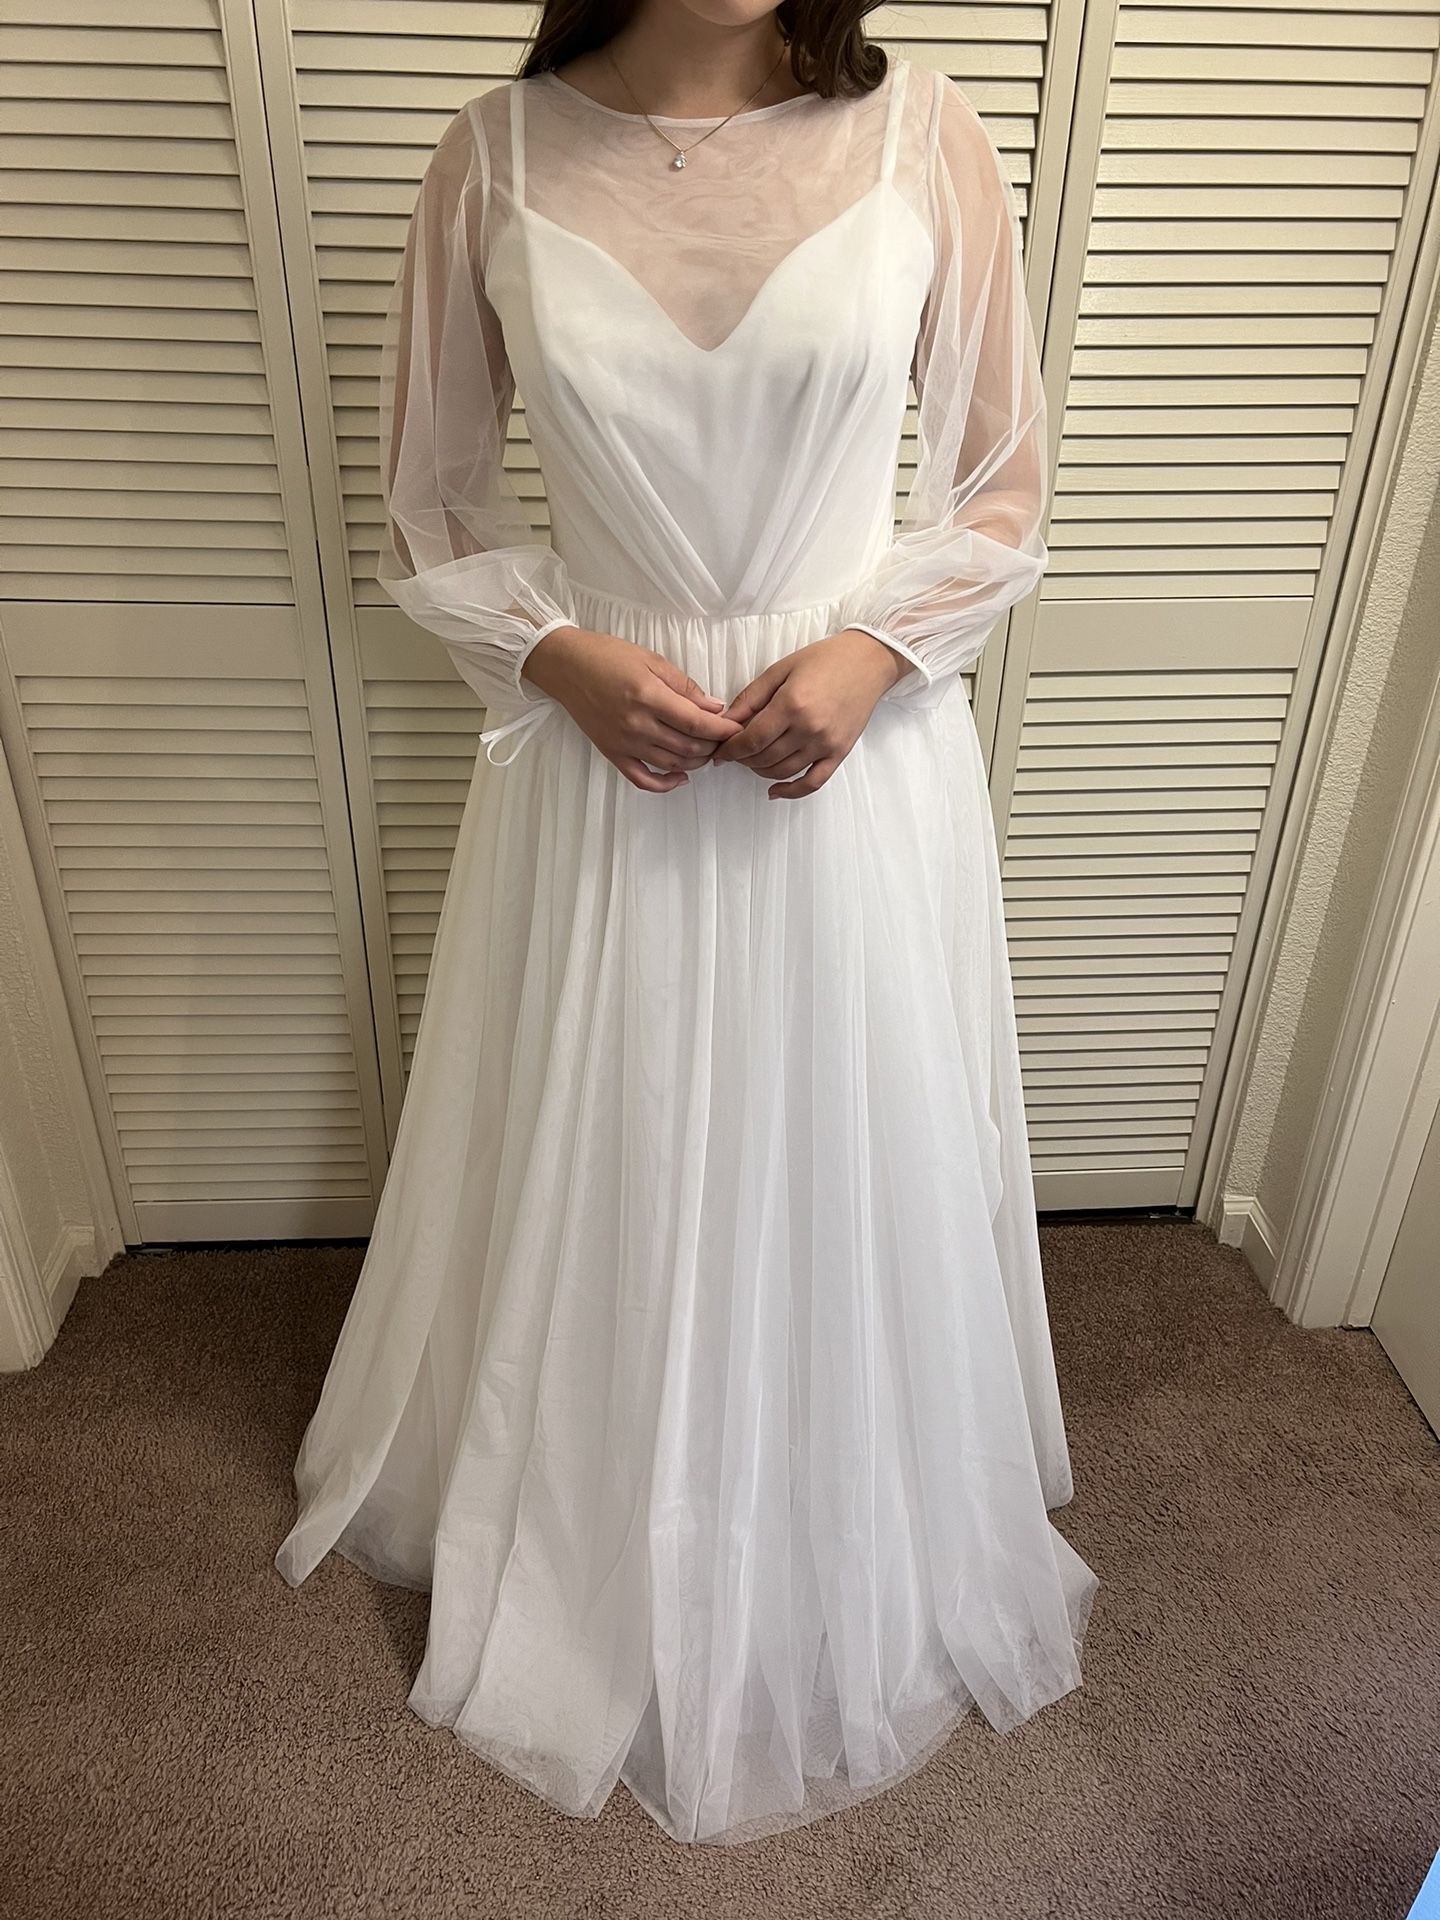 New Wedding Gown Dress  Sz Small/ Medium